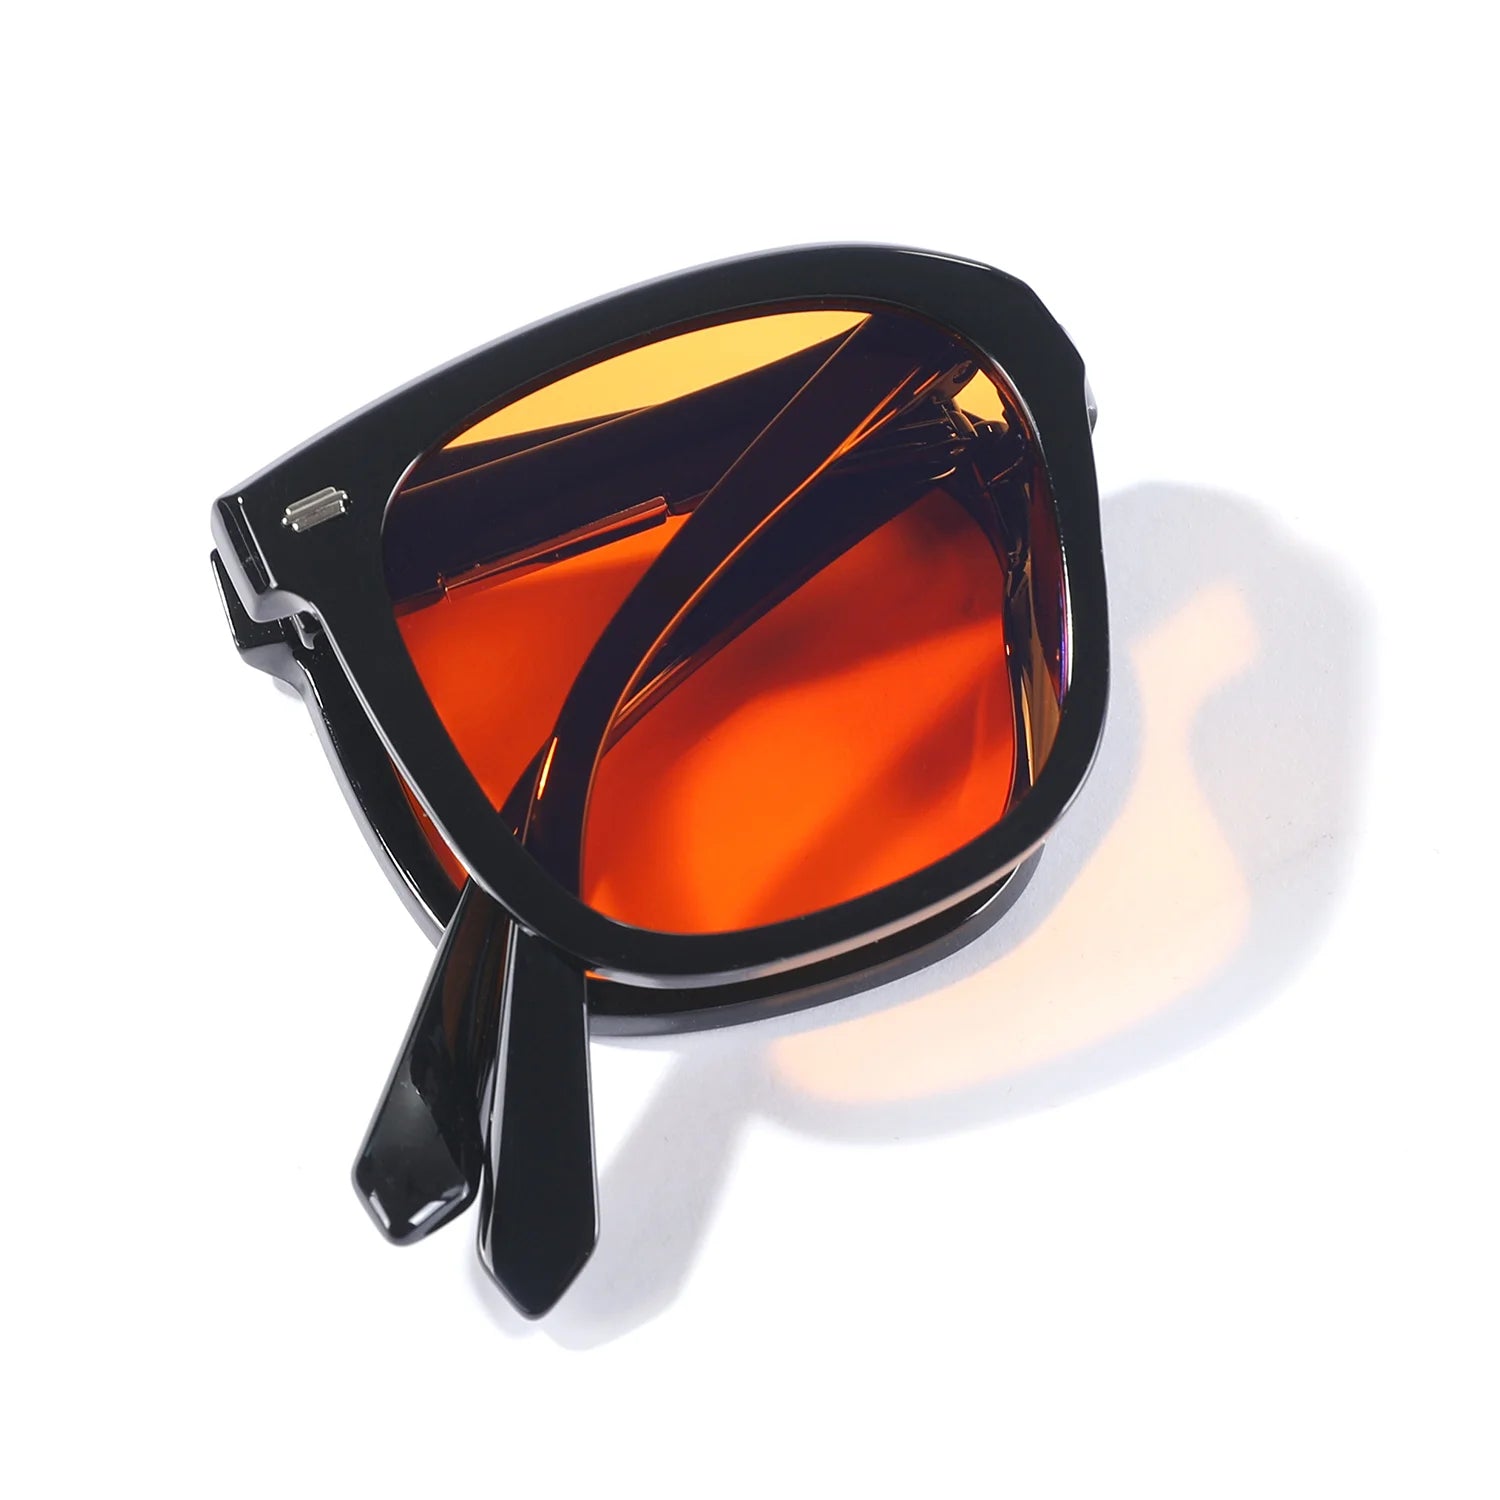 Black oversized sunglasses with orange lenses on a white background.